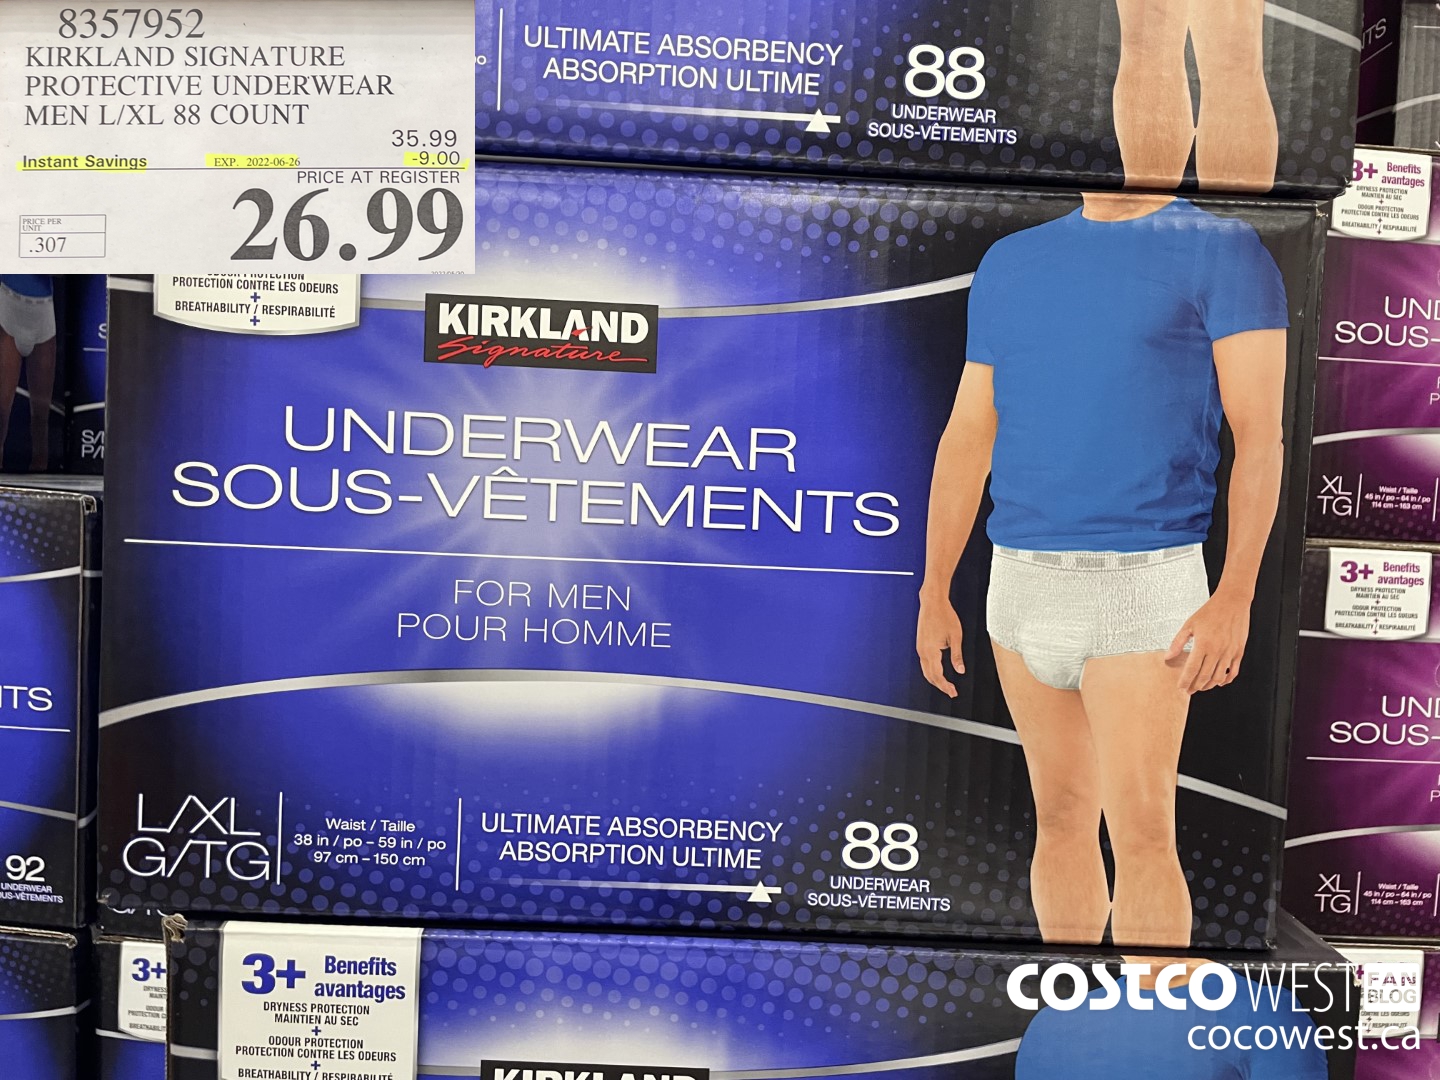 Kirkland Signature protective underwear for women, Small/Medium, 84 Count